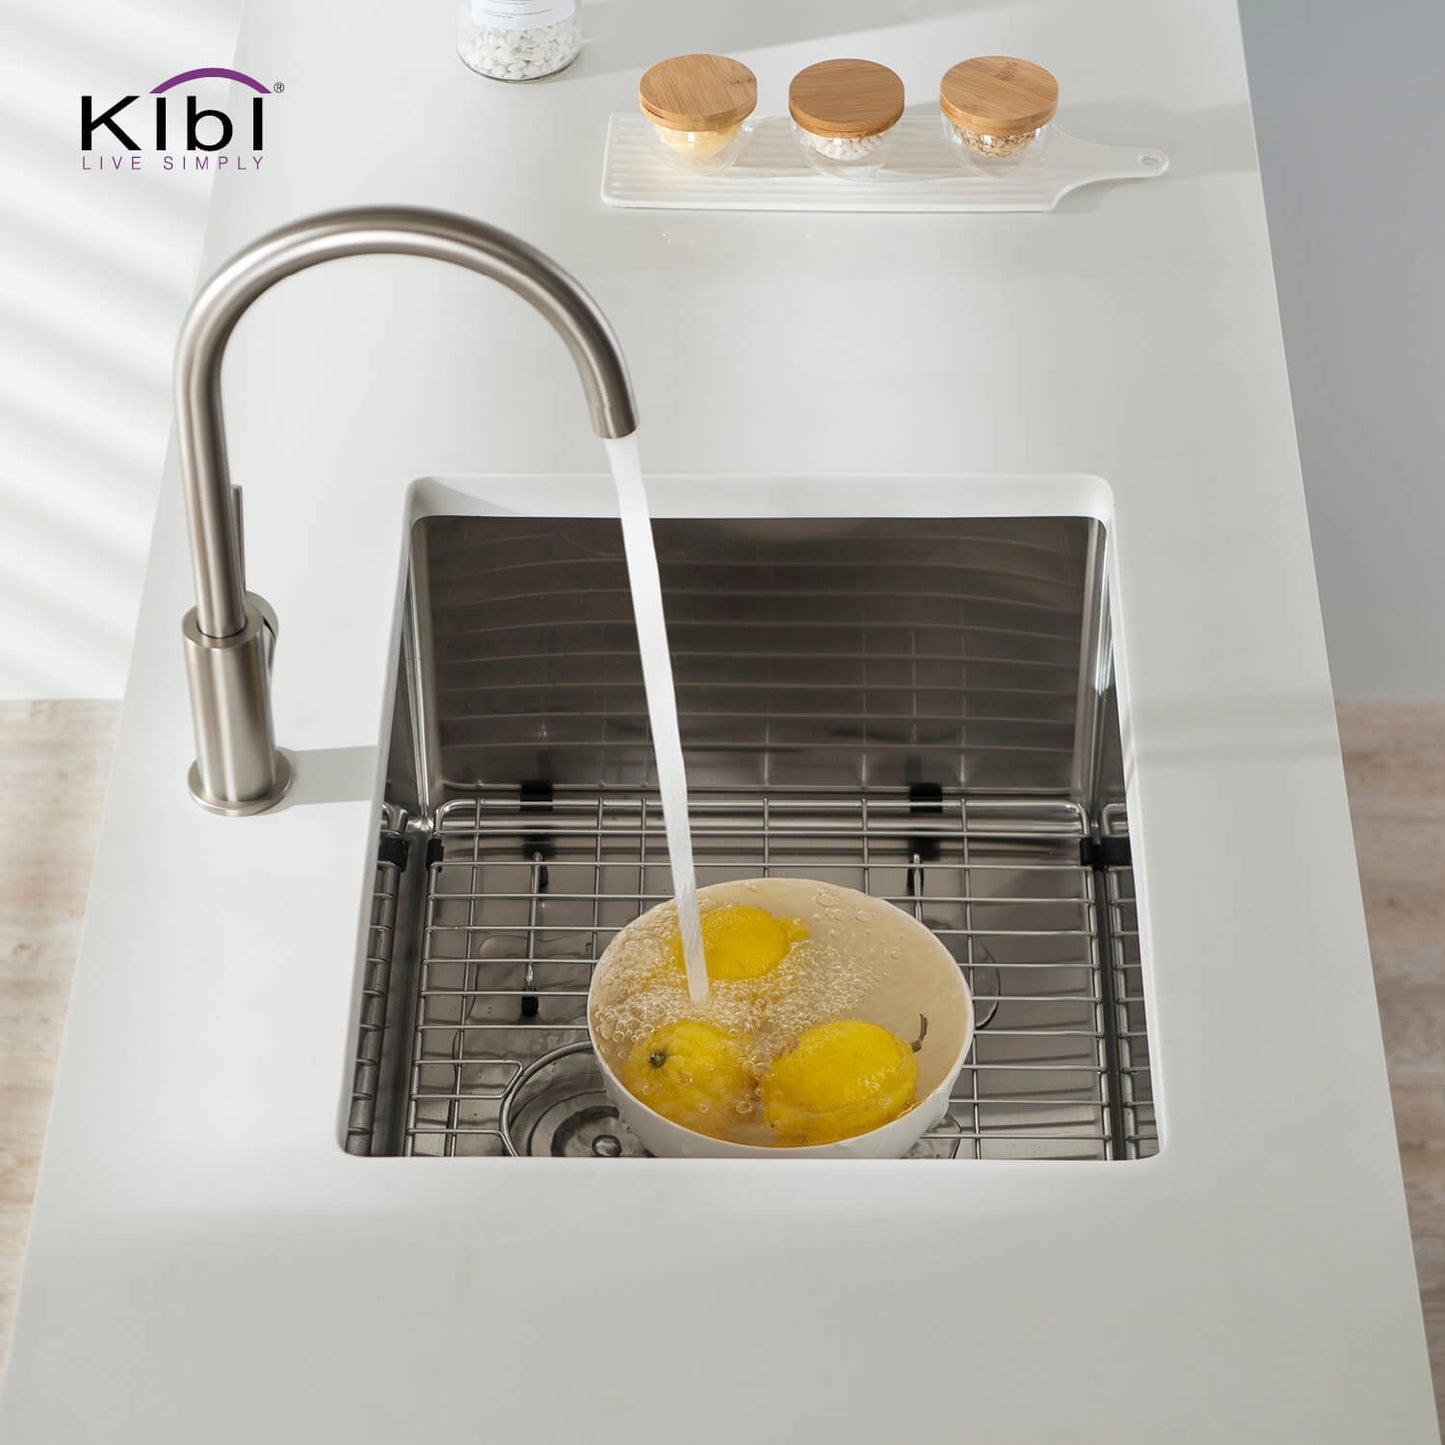 Kibi 23" x 18" x 10" Handcrafted Undermount Single Bowl Kitchen Sink With Satin Finish